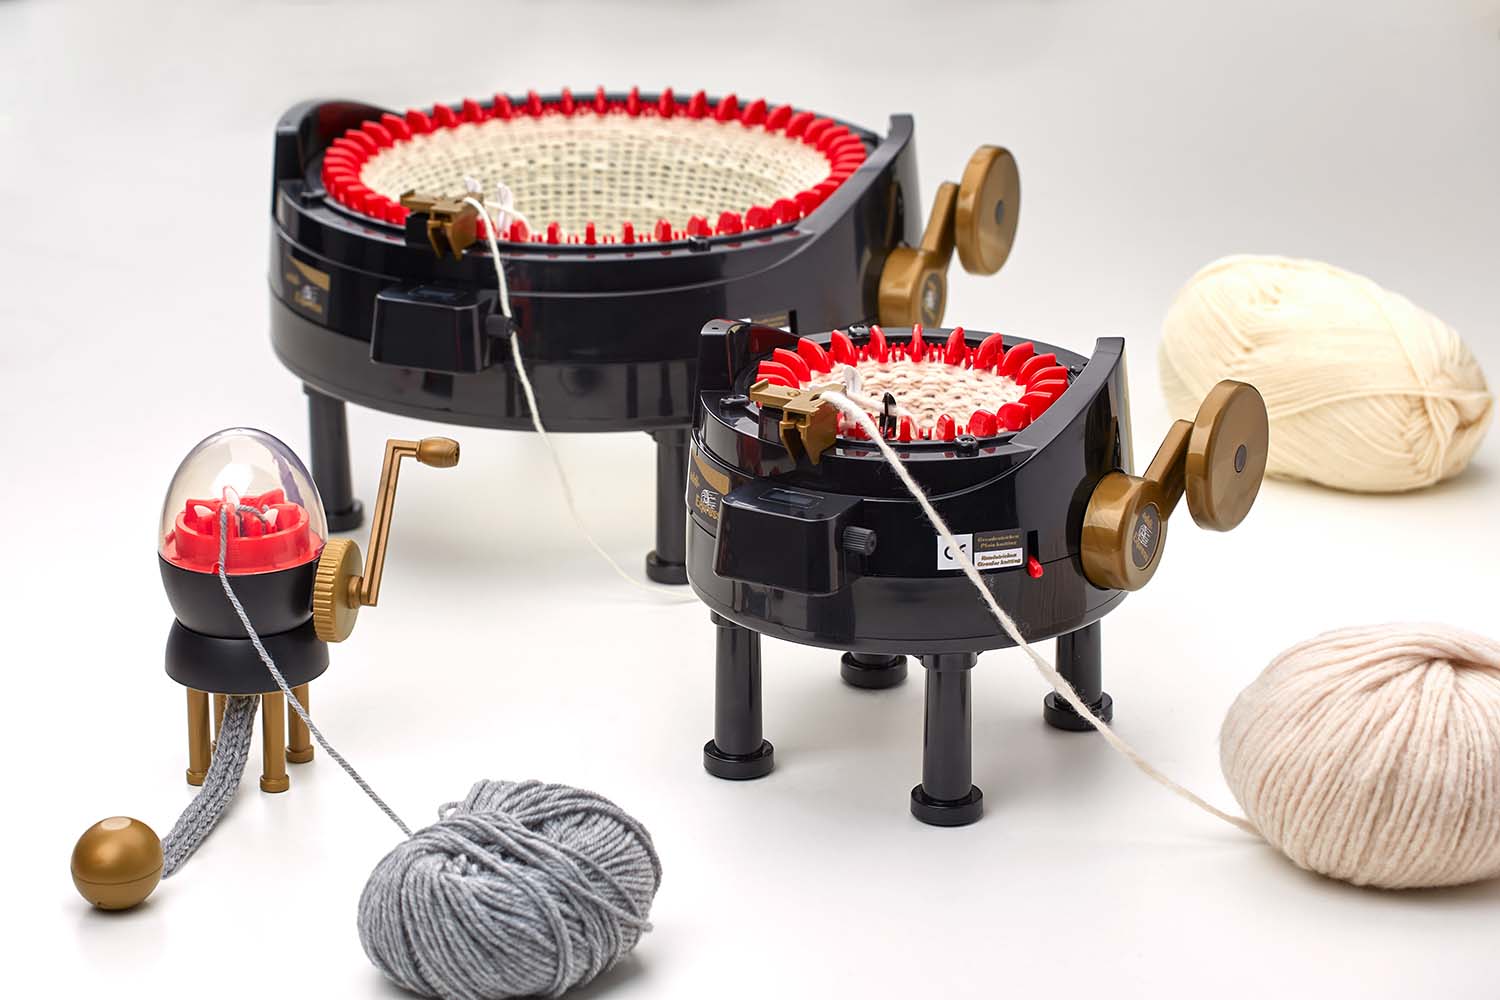 Addi Express Professional Knitting Mill 990-2 Hand Knitting Machine With 22  Needles New Version 